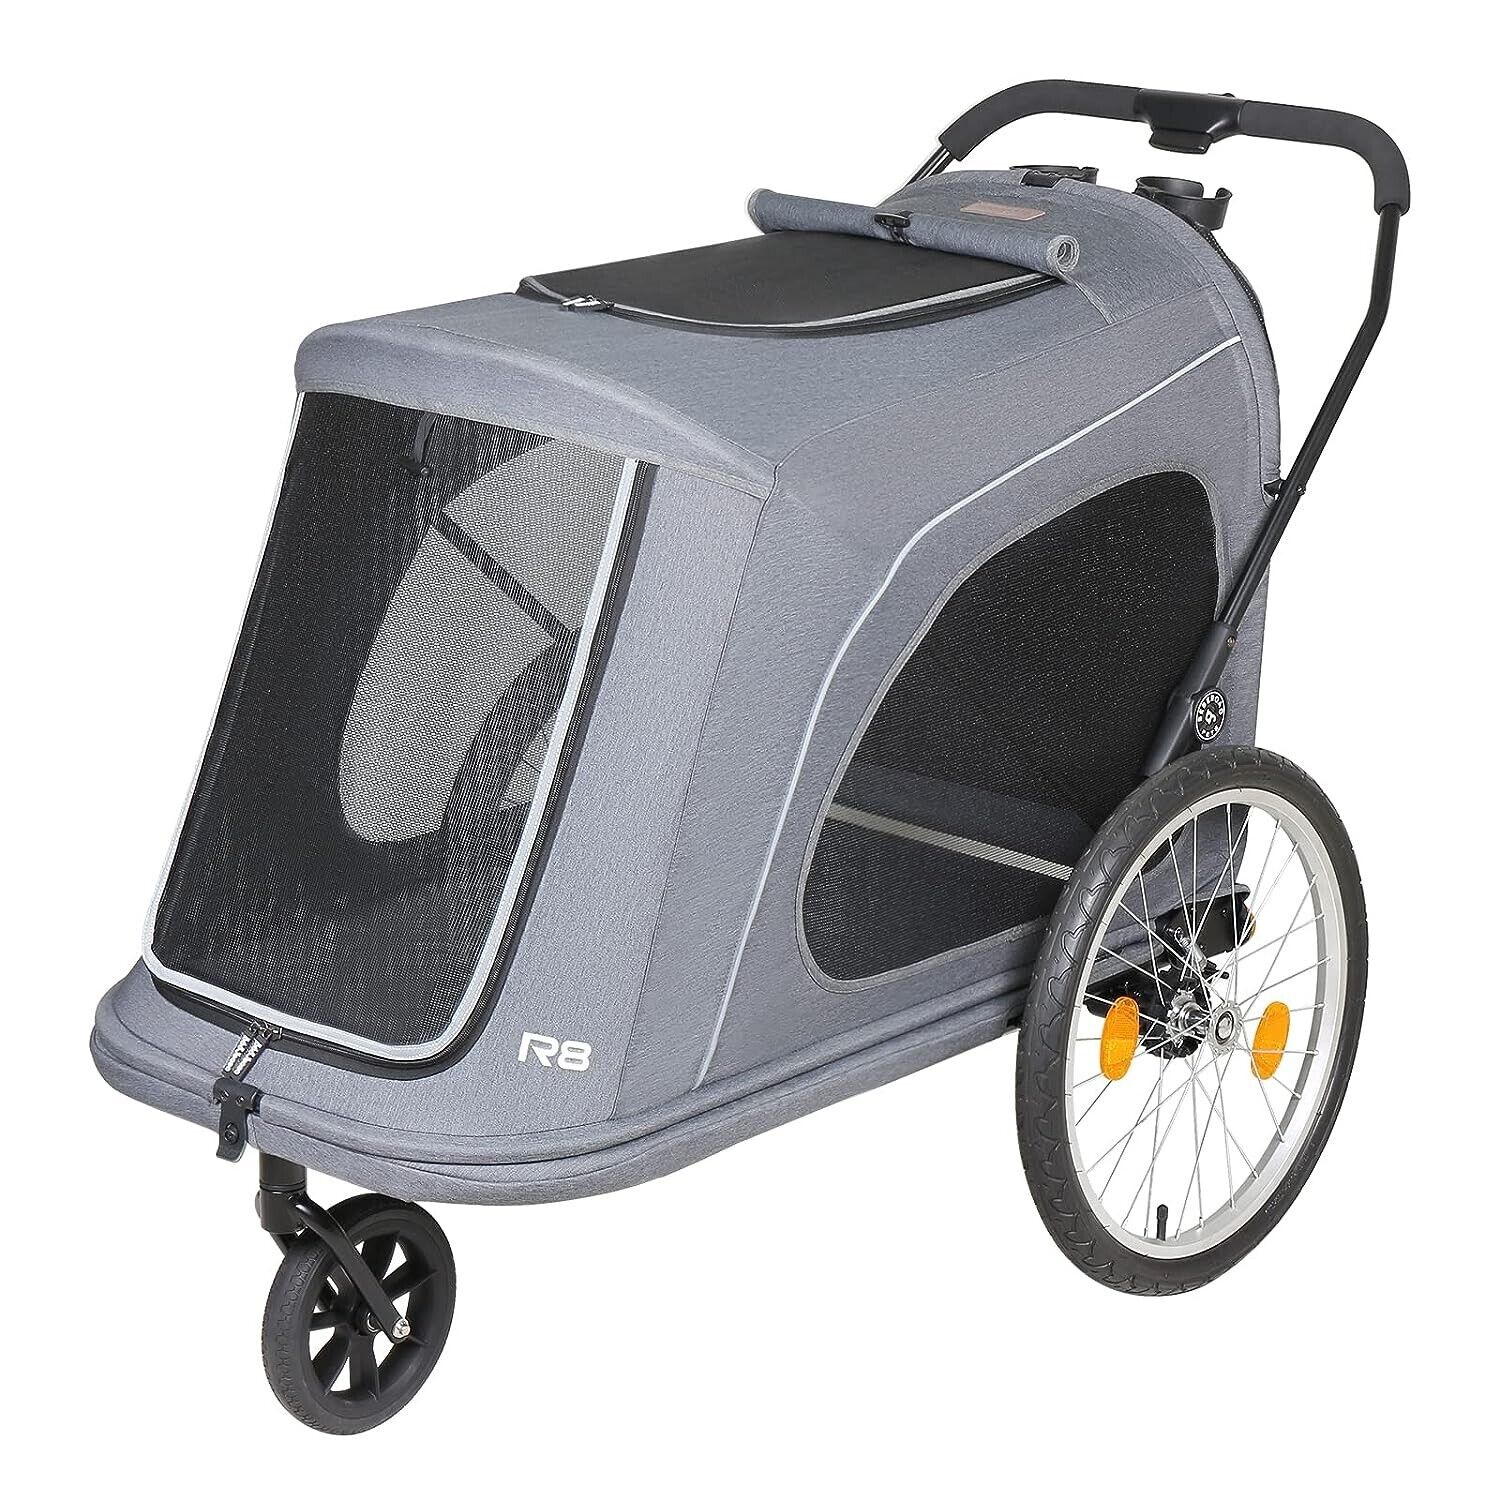 Beberoad Pets R8 Luxury Foldable Pet Stroller, Dog Stroller